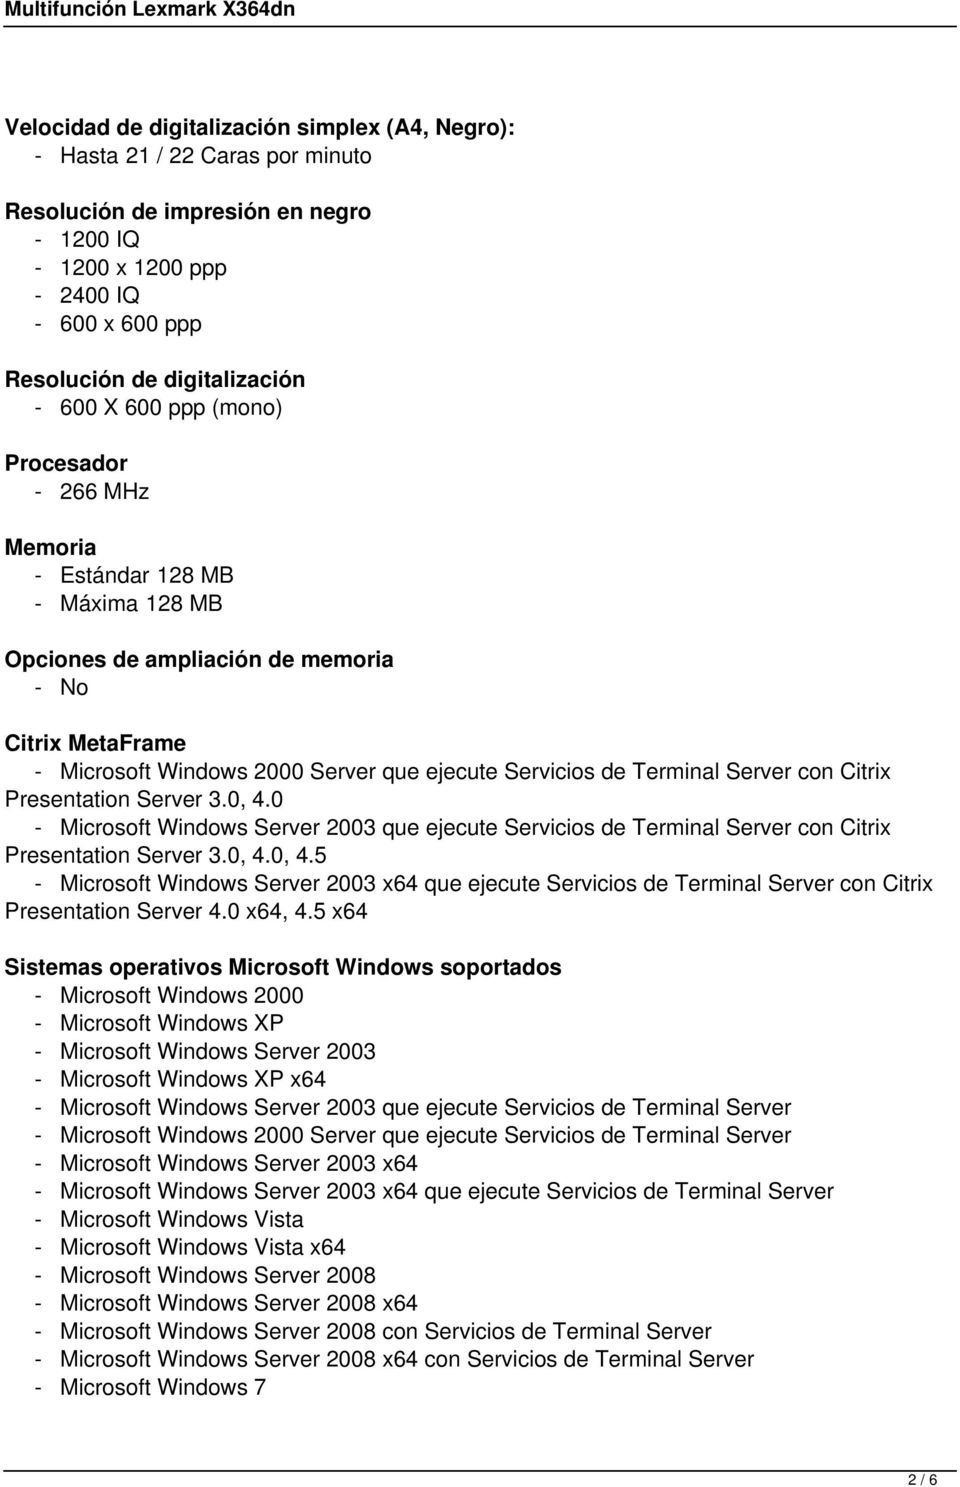 Terminal Server con Citrix Presentation Server 3.0, 4.0 - Microsoft Windows Server 2003 que ejecute Servicios de Terminal Server con Citrix Presentation Server 3.0, 4.0, 4.5 - Microsoft Windows Server 2003 x64 que ejecute Servicios de Terminal Server con Citrix Presentation Server 4.